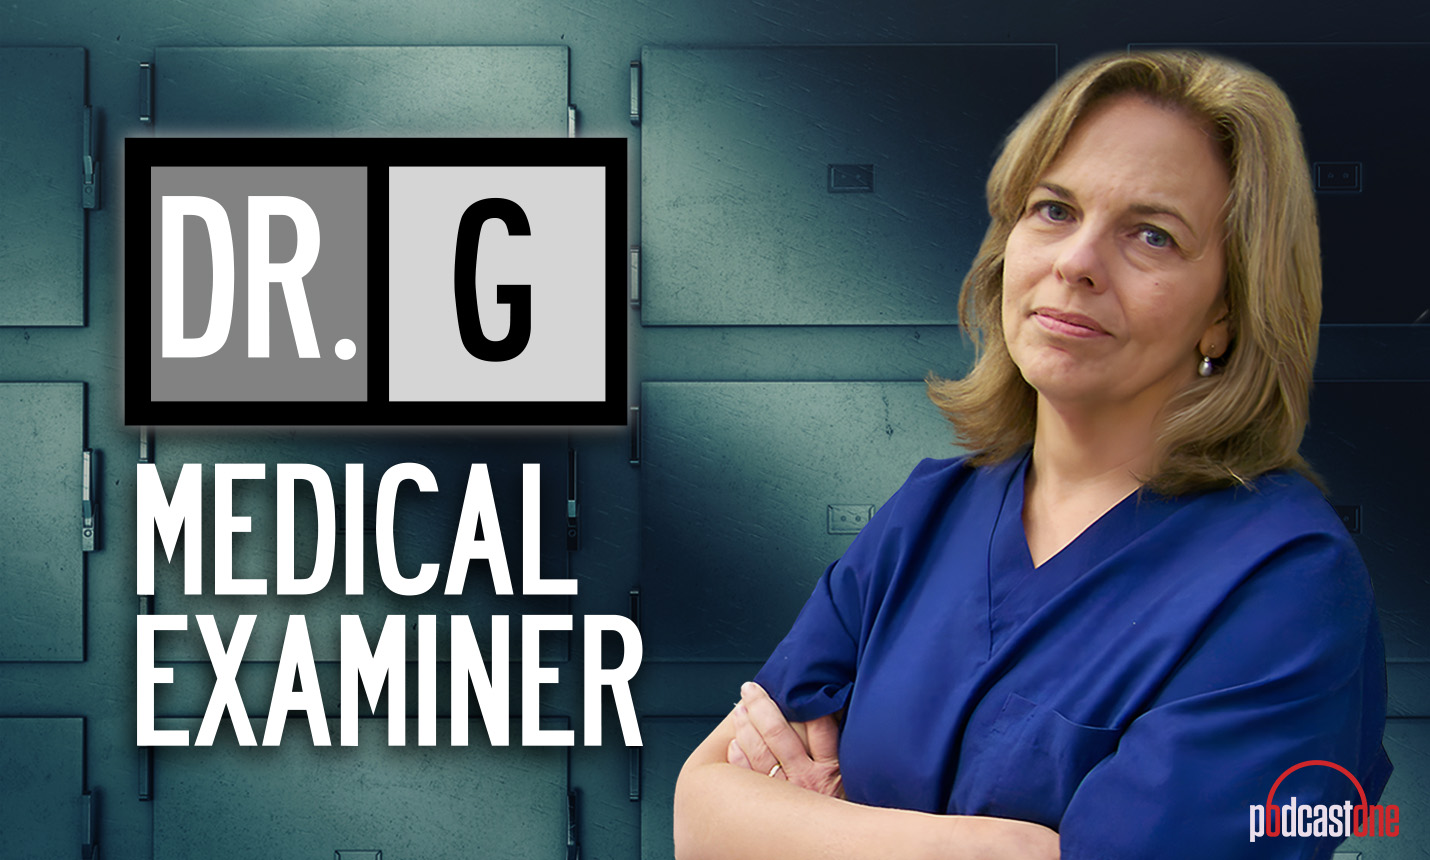 Dr. G Medical Examiner